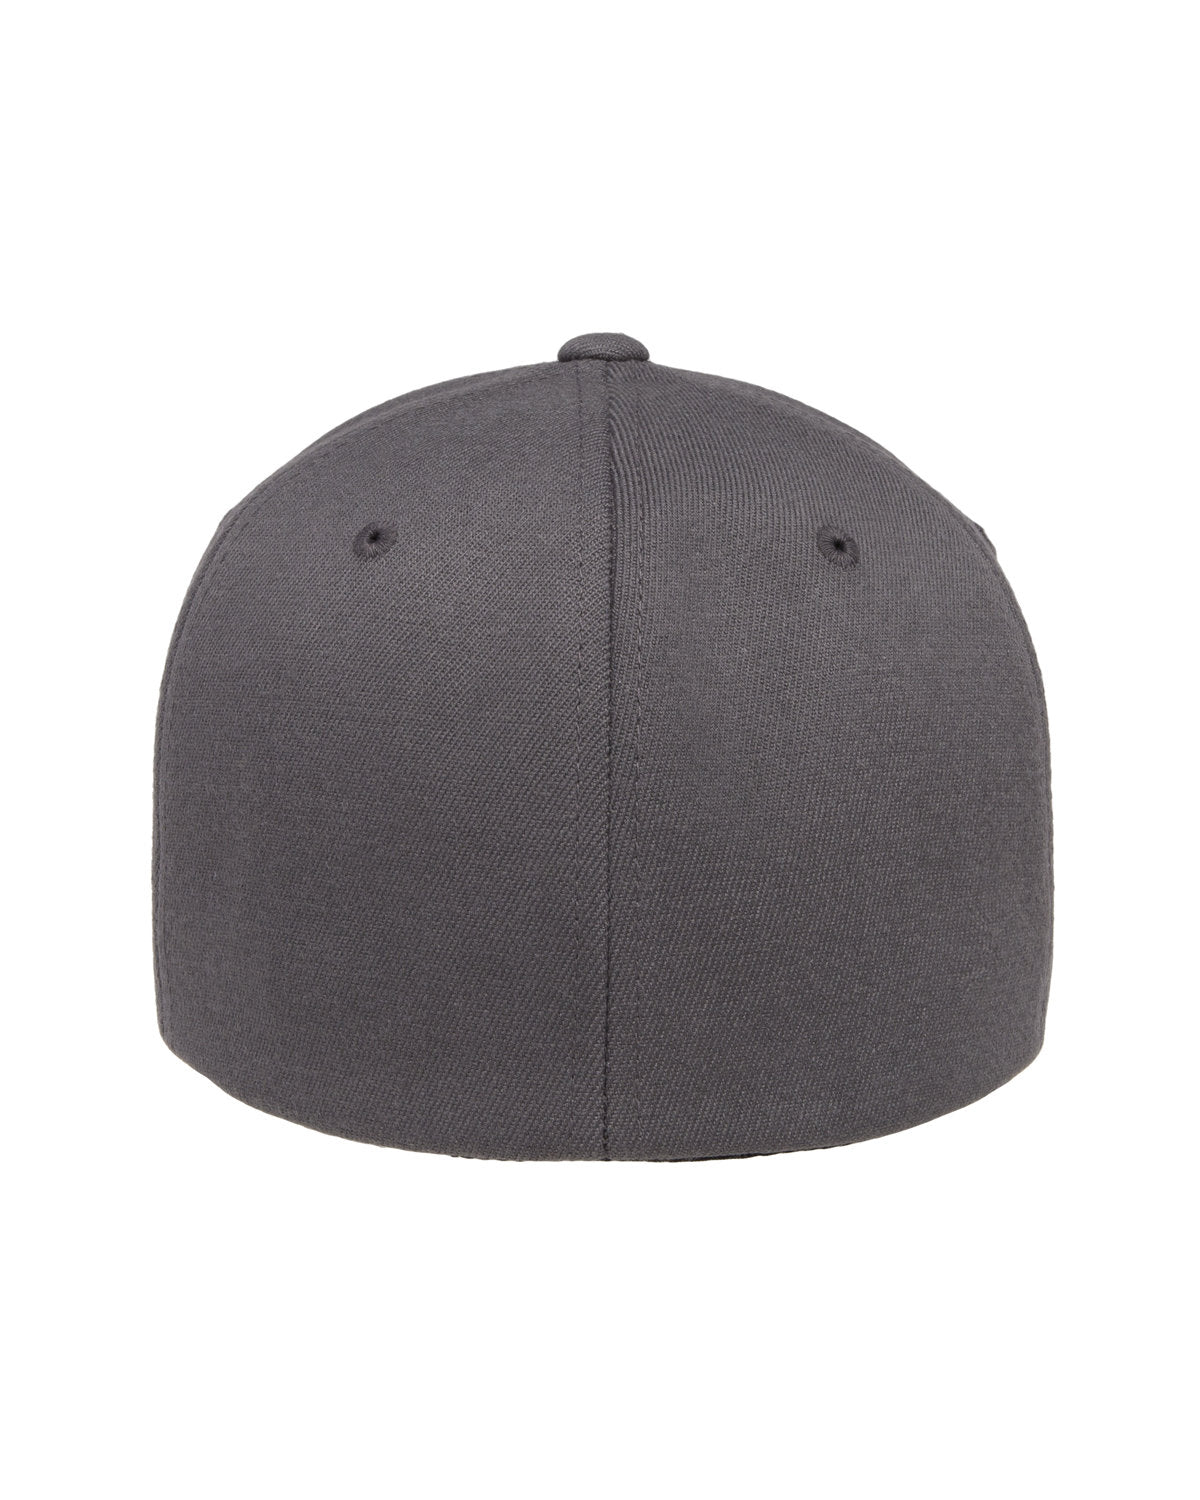 Grey Blend Wool Caps, Branded Flexfit